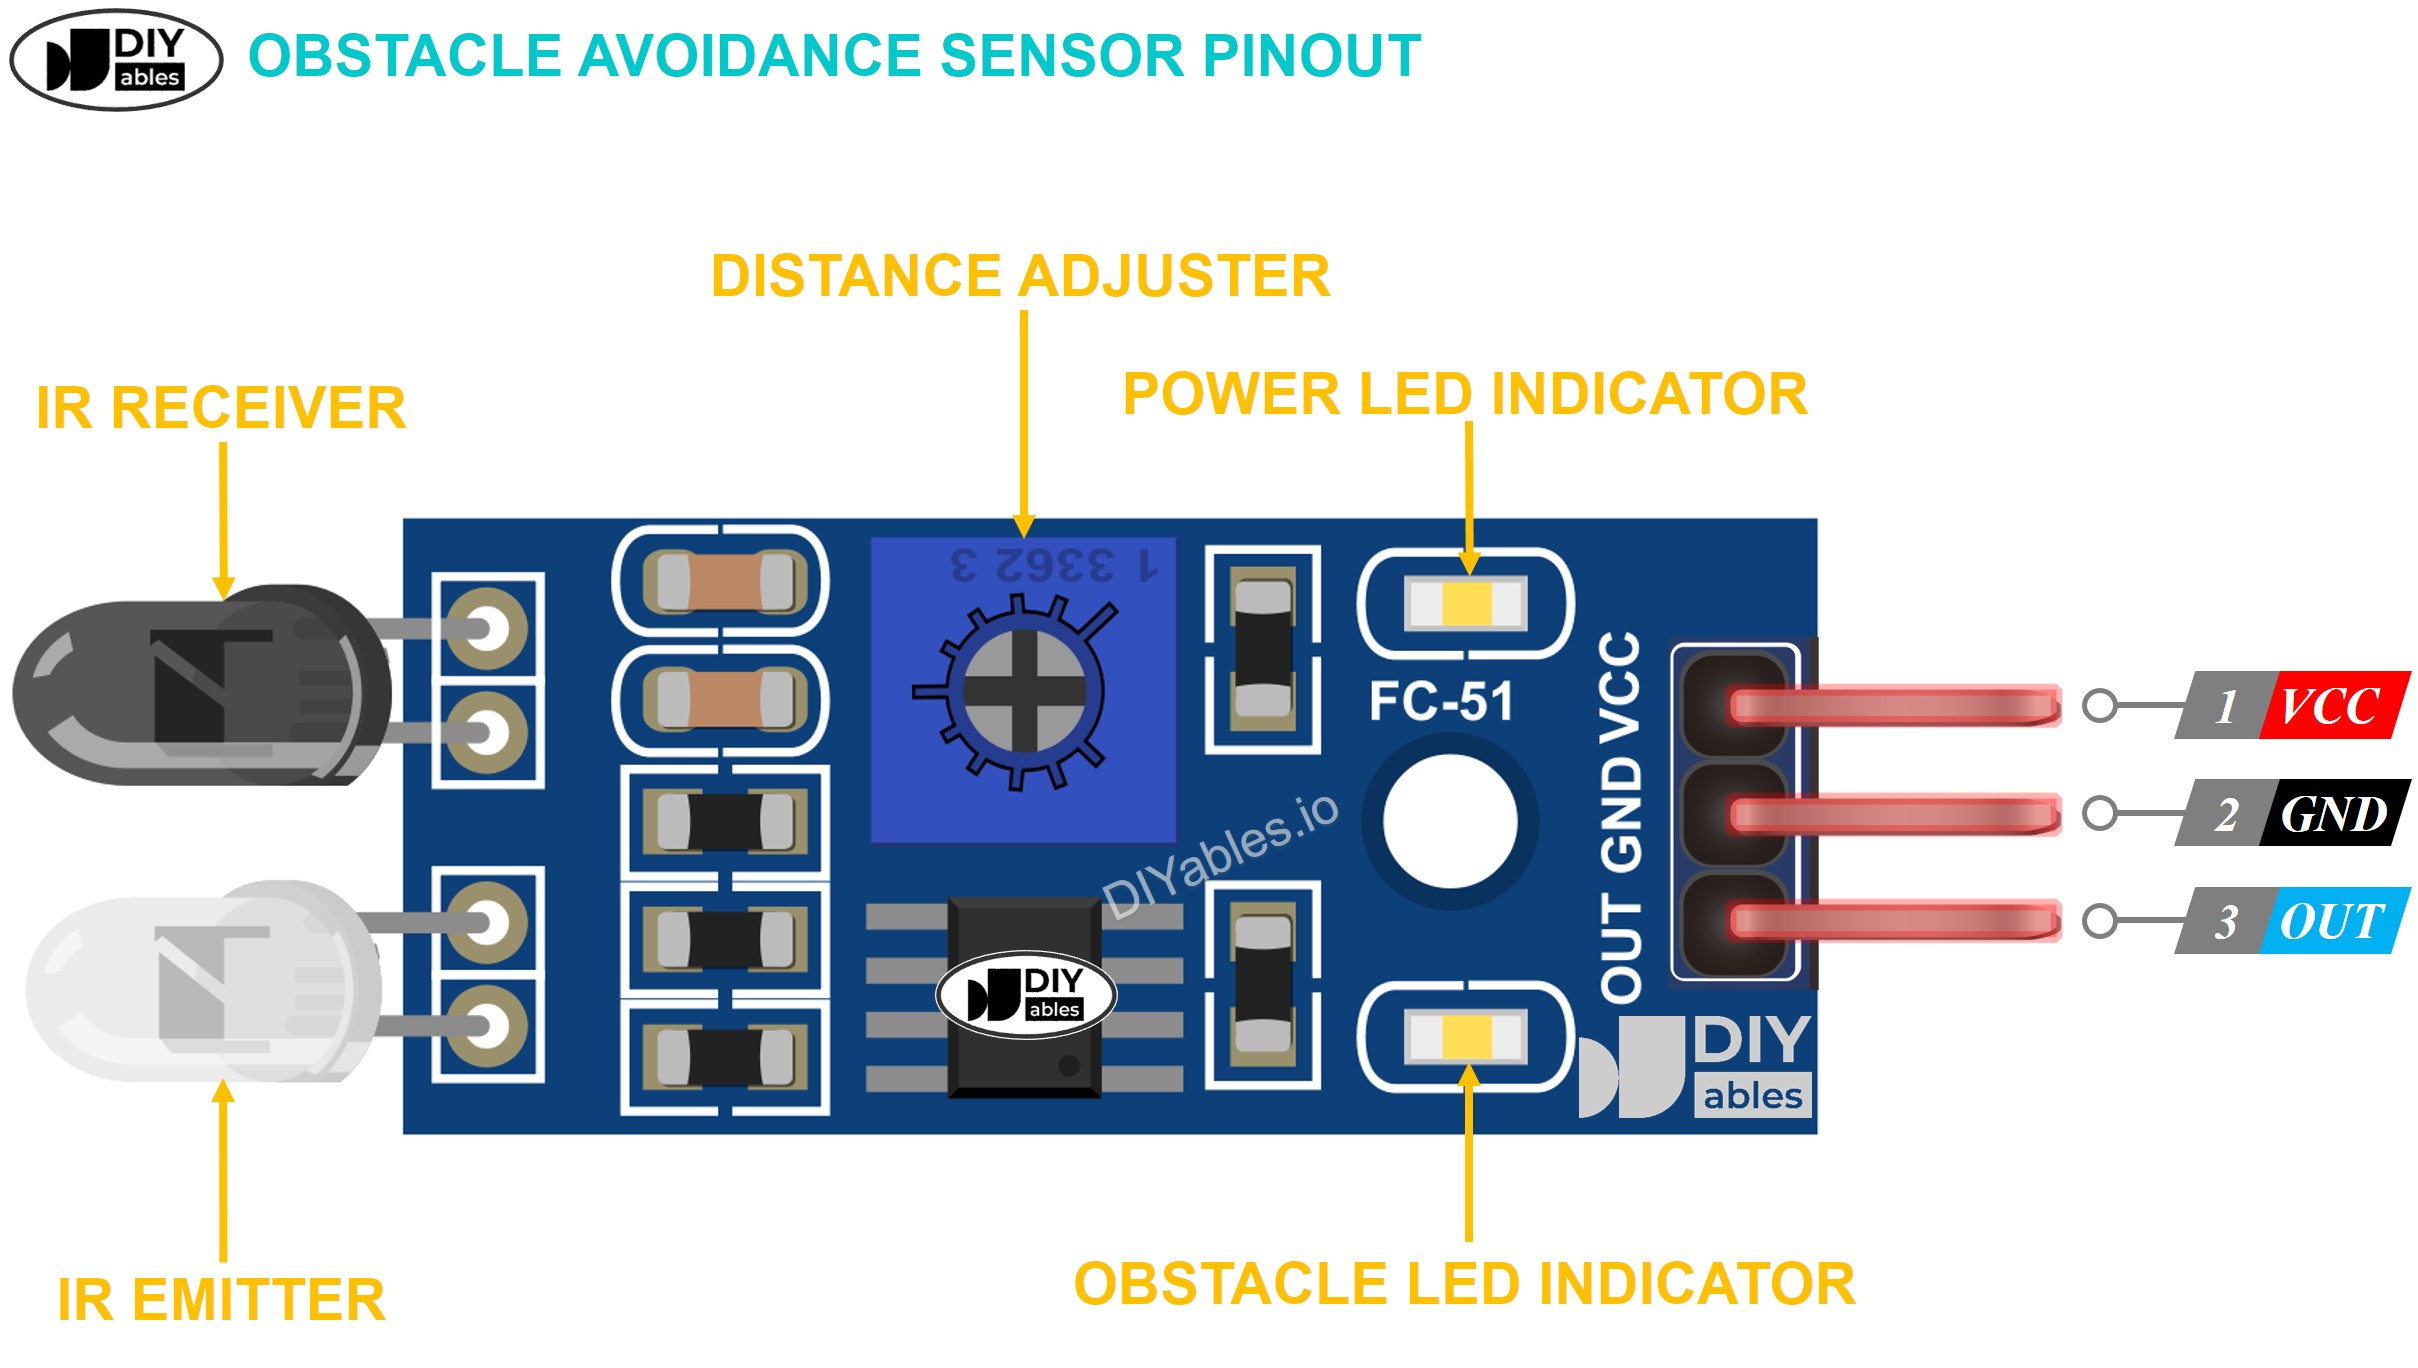 Obstacle Avoidance Sensor